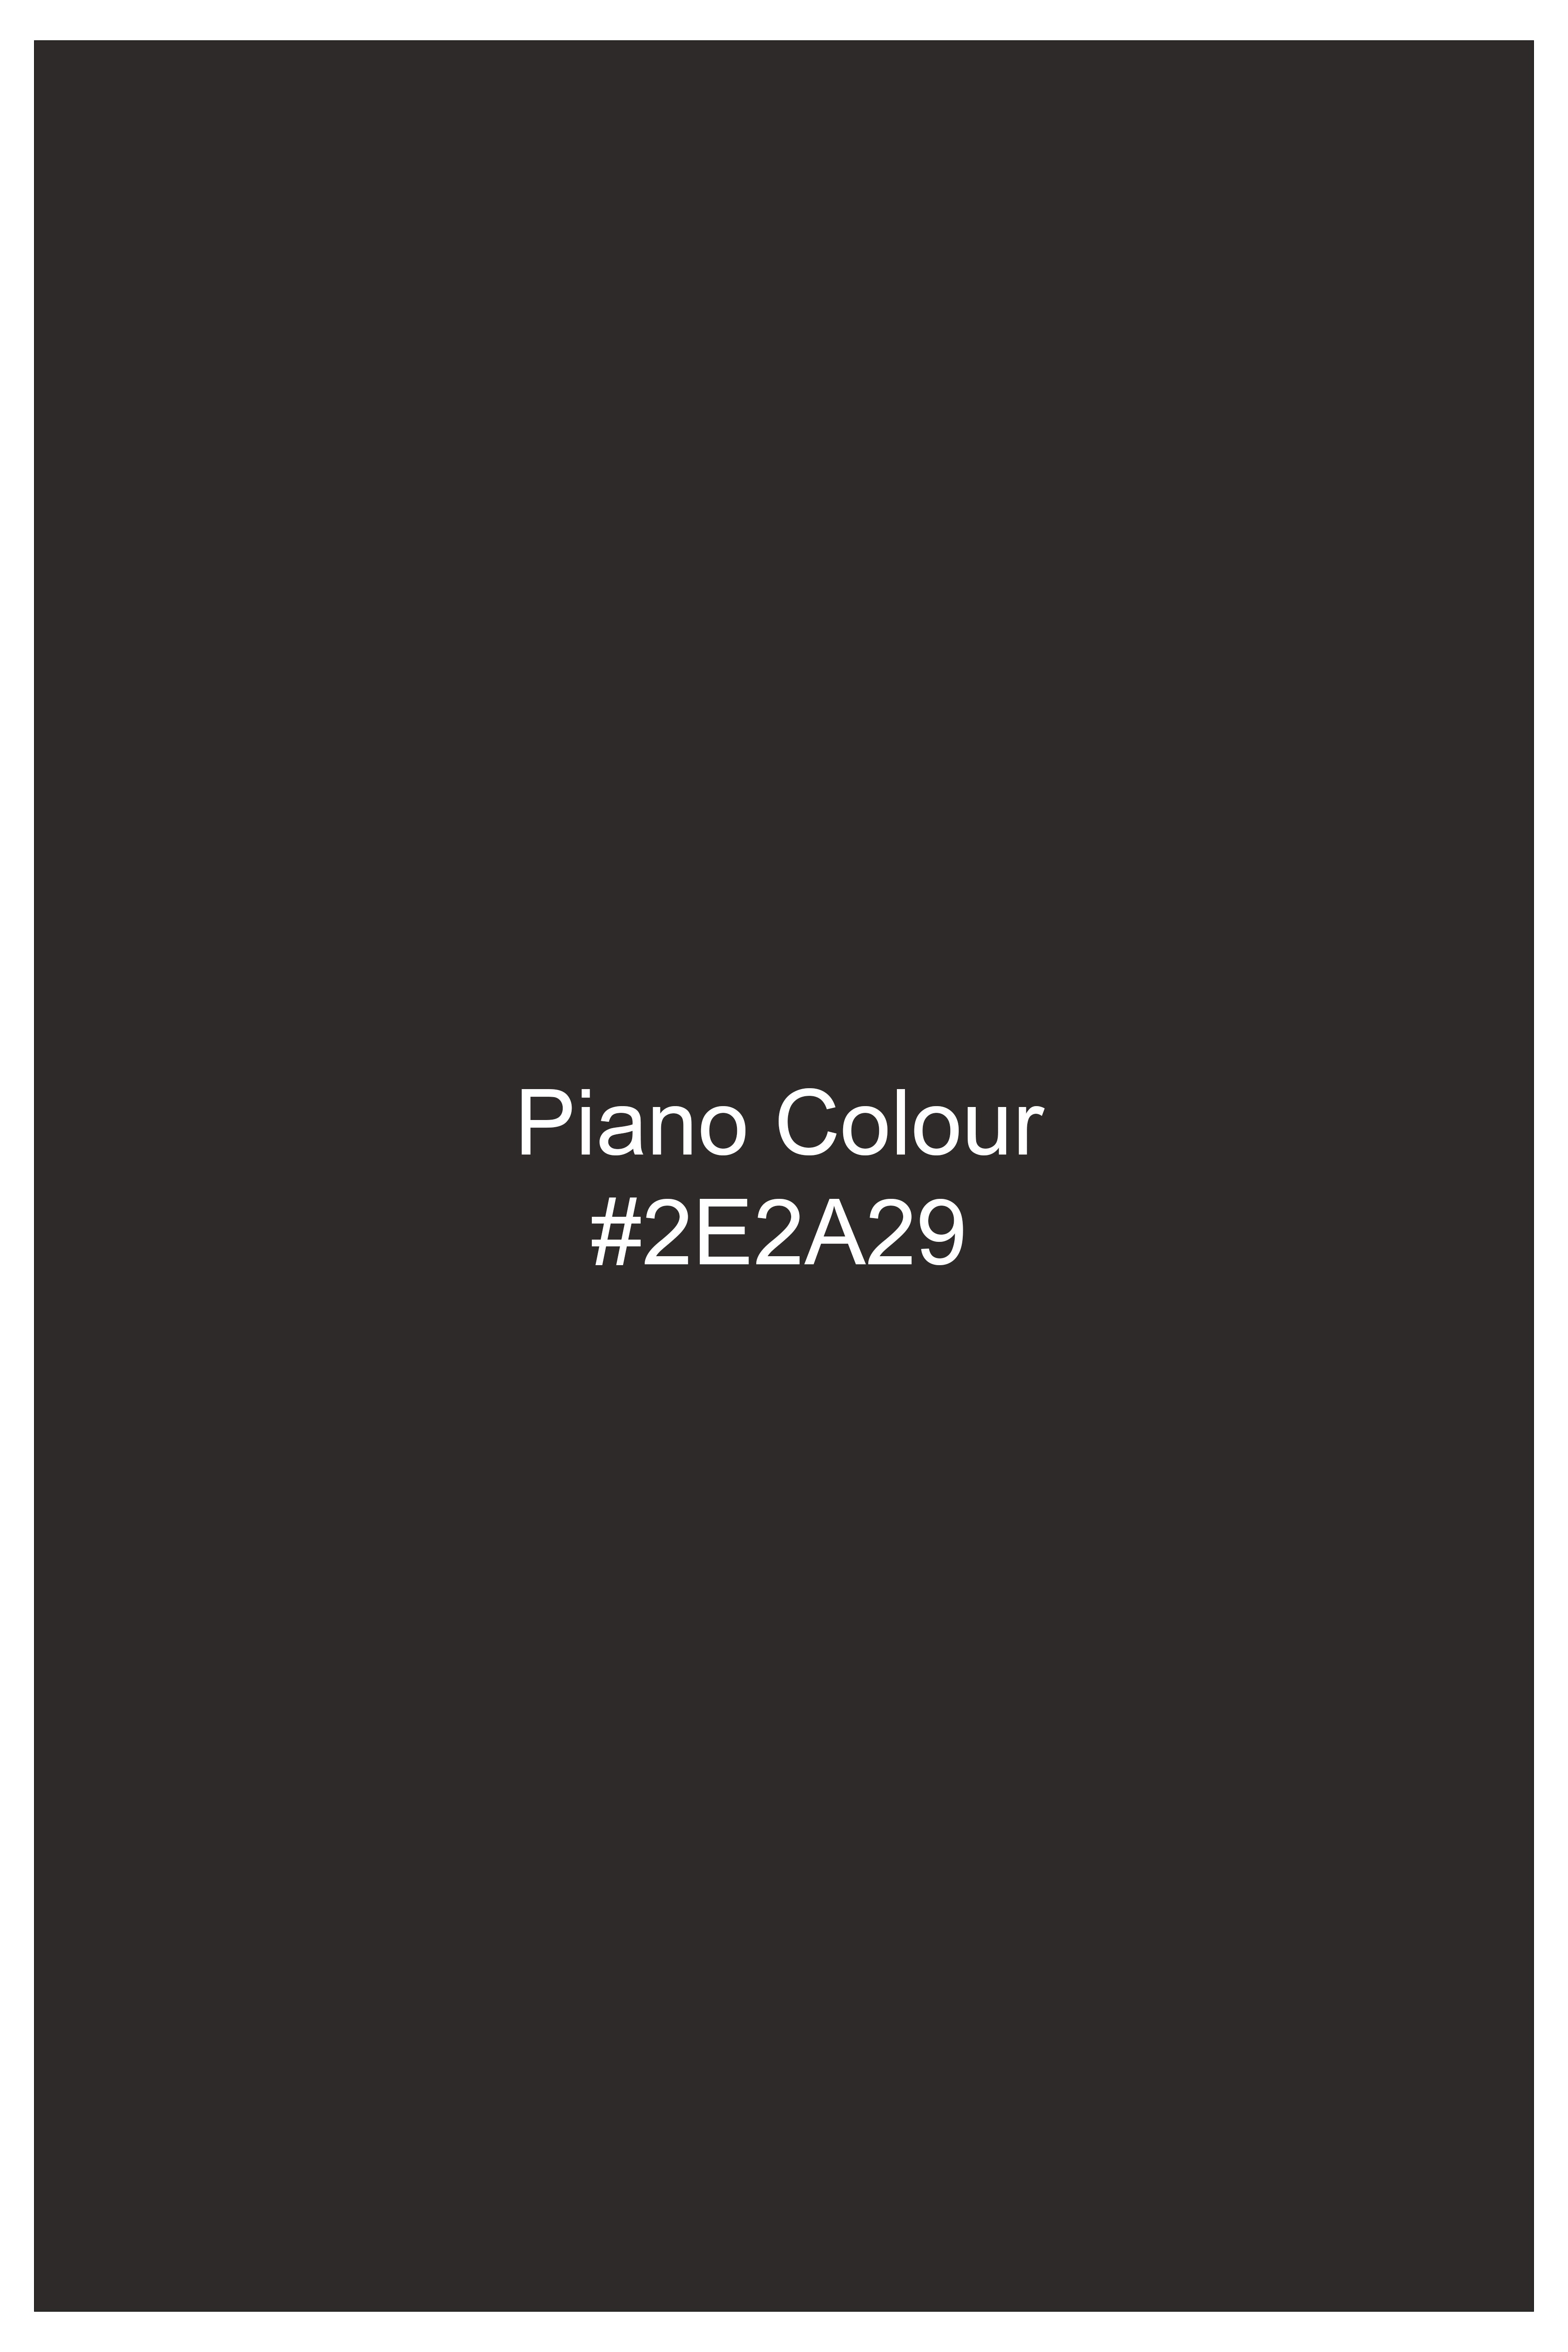 Piano Brown Plaid Tweed Blazer